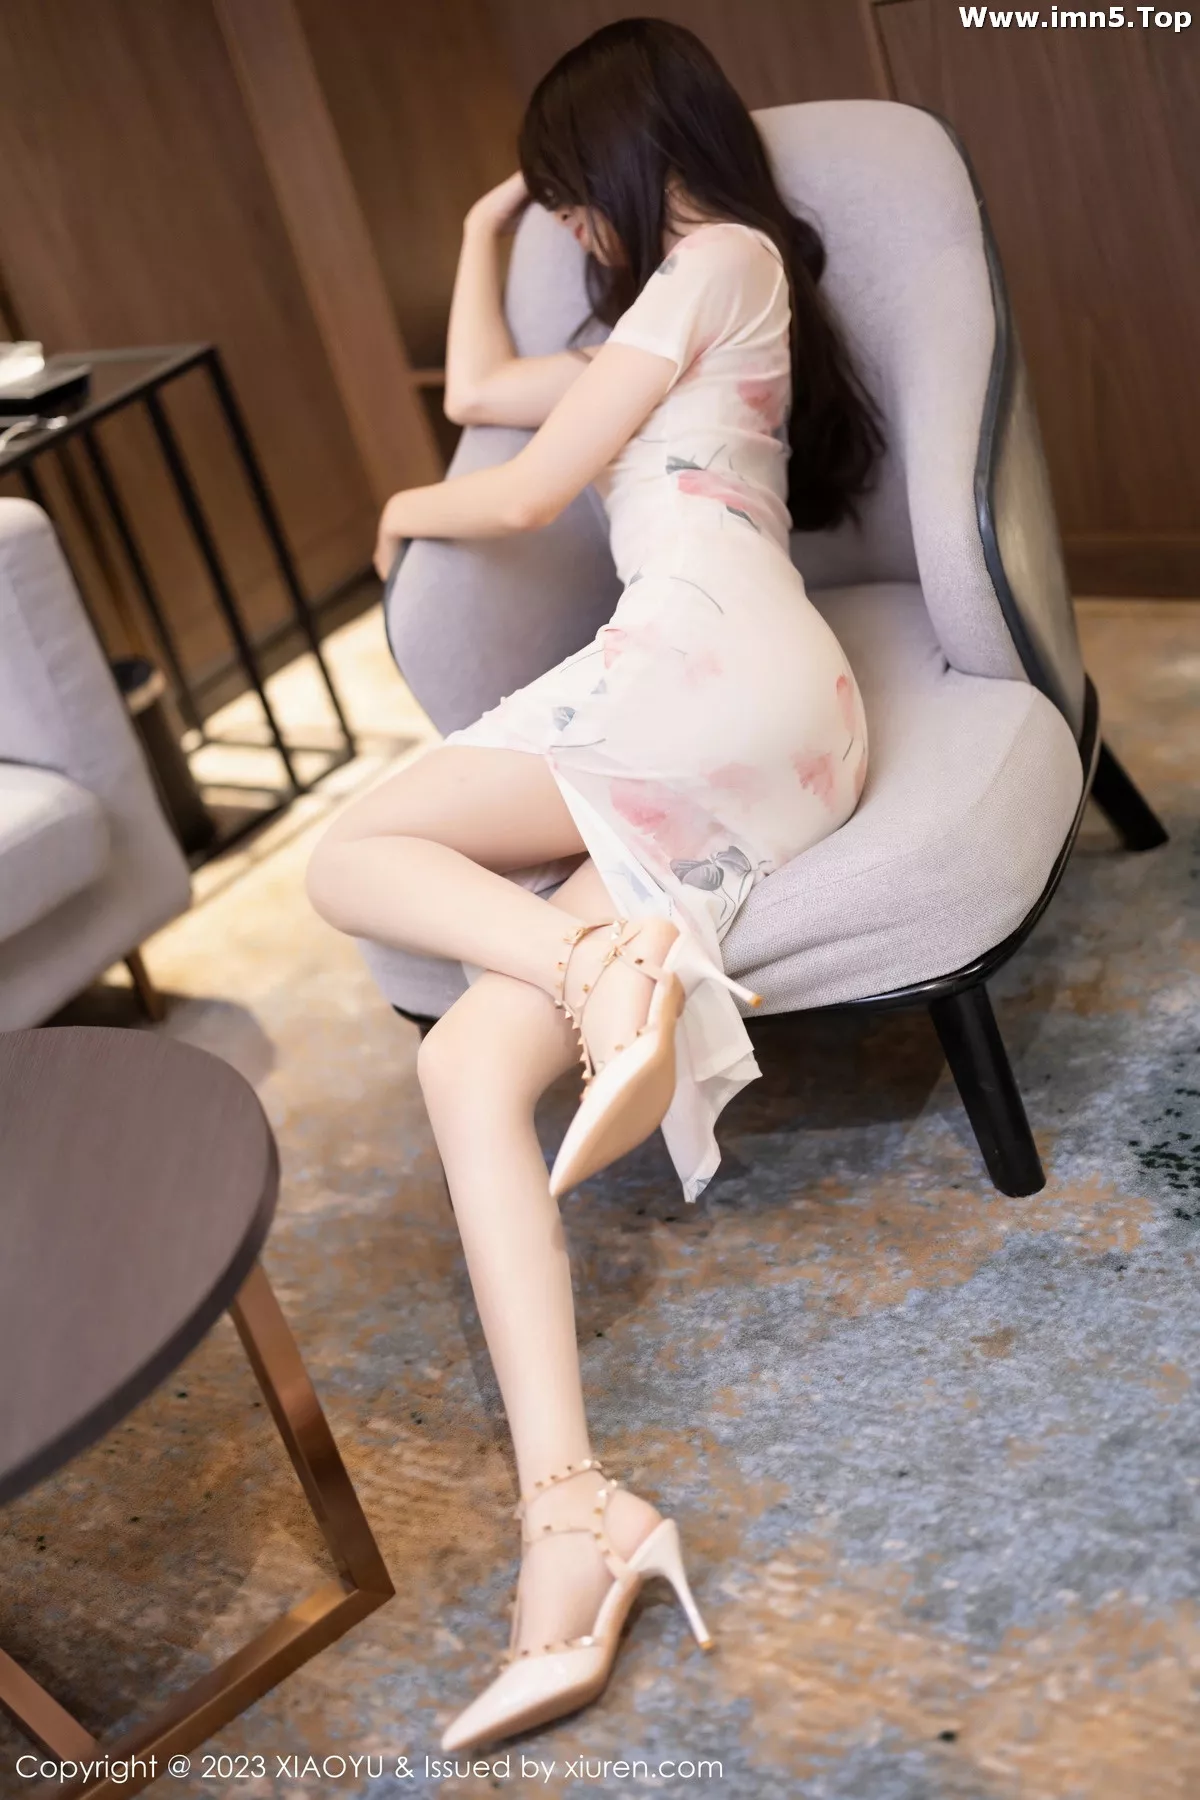 [XiaoYu画语界]Vol.1093_模特林乐一米色图案旗袍+白色薄纱情趣服饰秀曼妙身姿诱惑写真83P